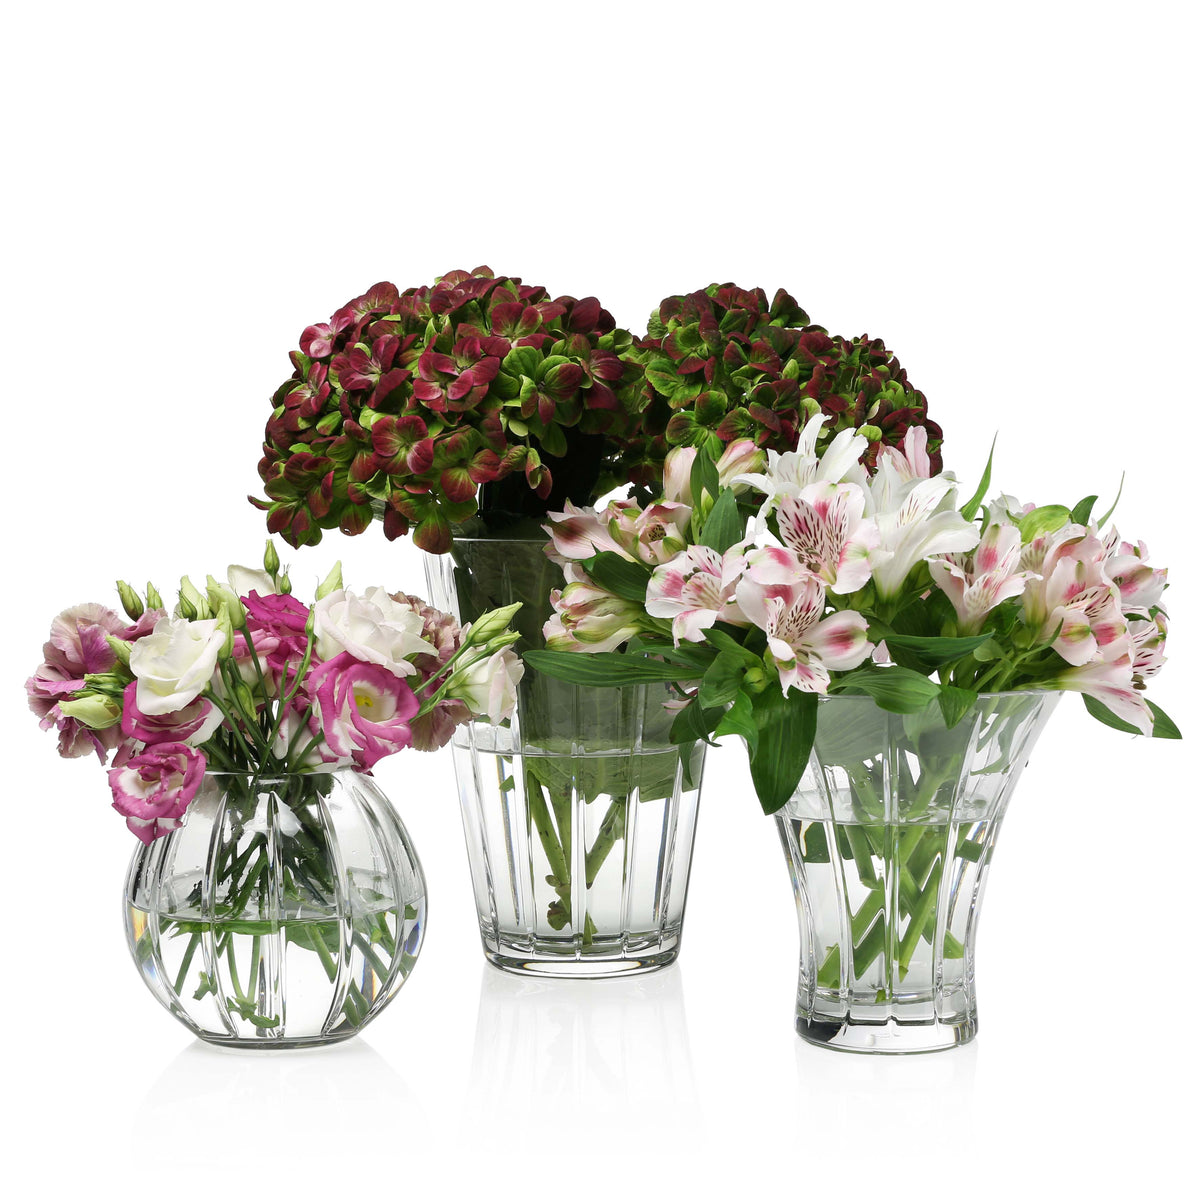 Image of assorted floral arrangements 